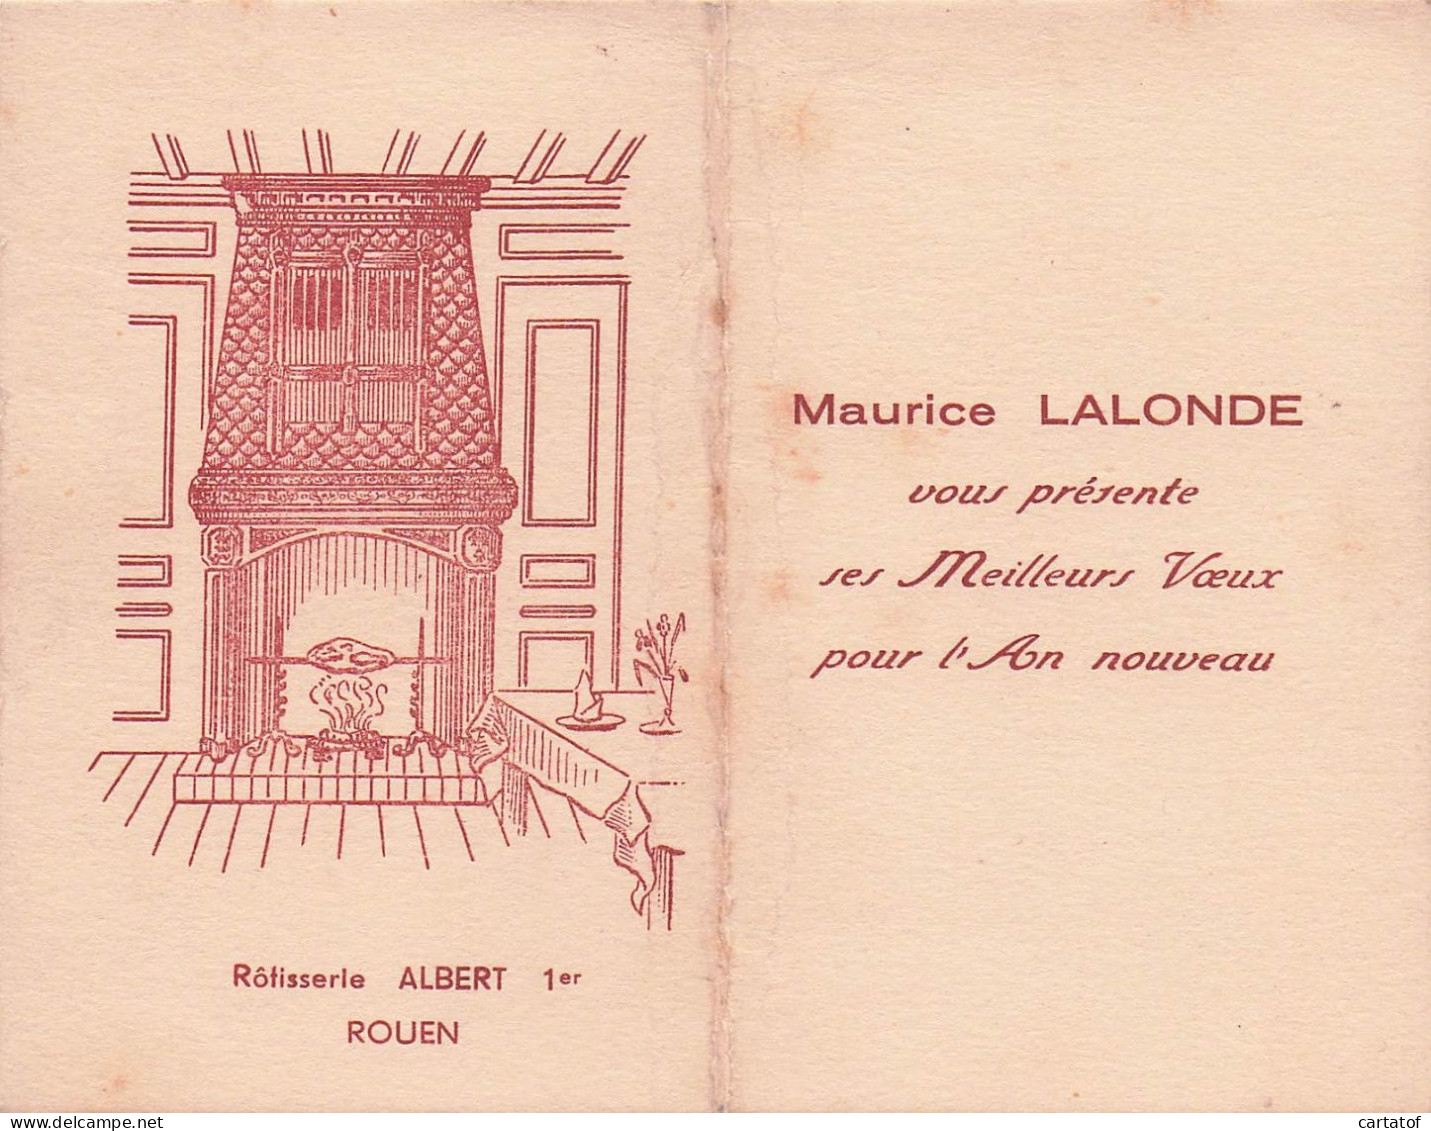 Rotisserie ALBERT 1er  ROUEN . Maurice LALONDE Présente Ses Meilleurs Vœux - Hotel Keycards